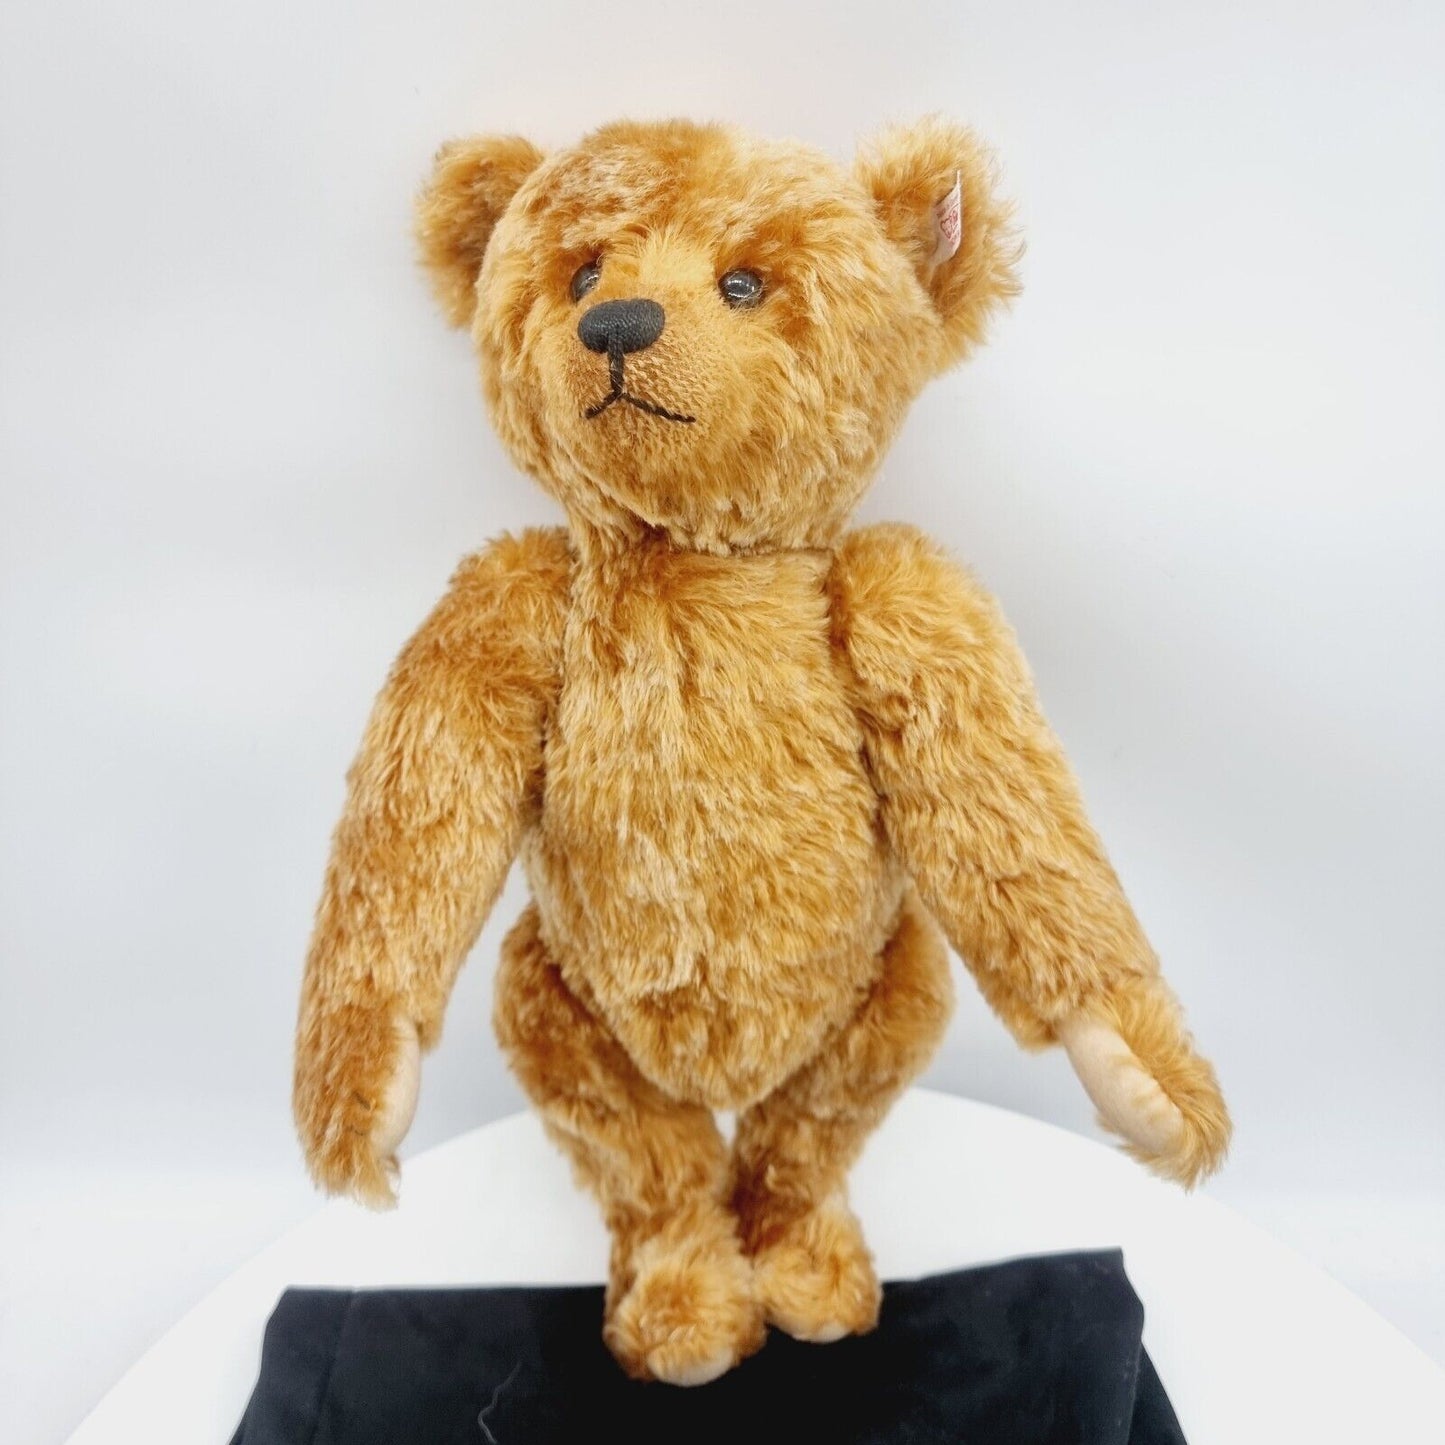 Steiff 667398 American Pride Teddybär 45 cm 2004 limitiert 1909 North America